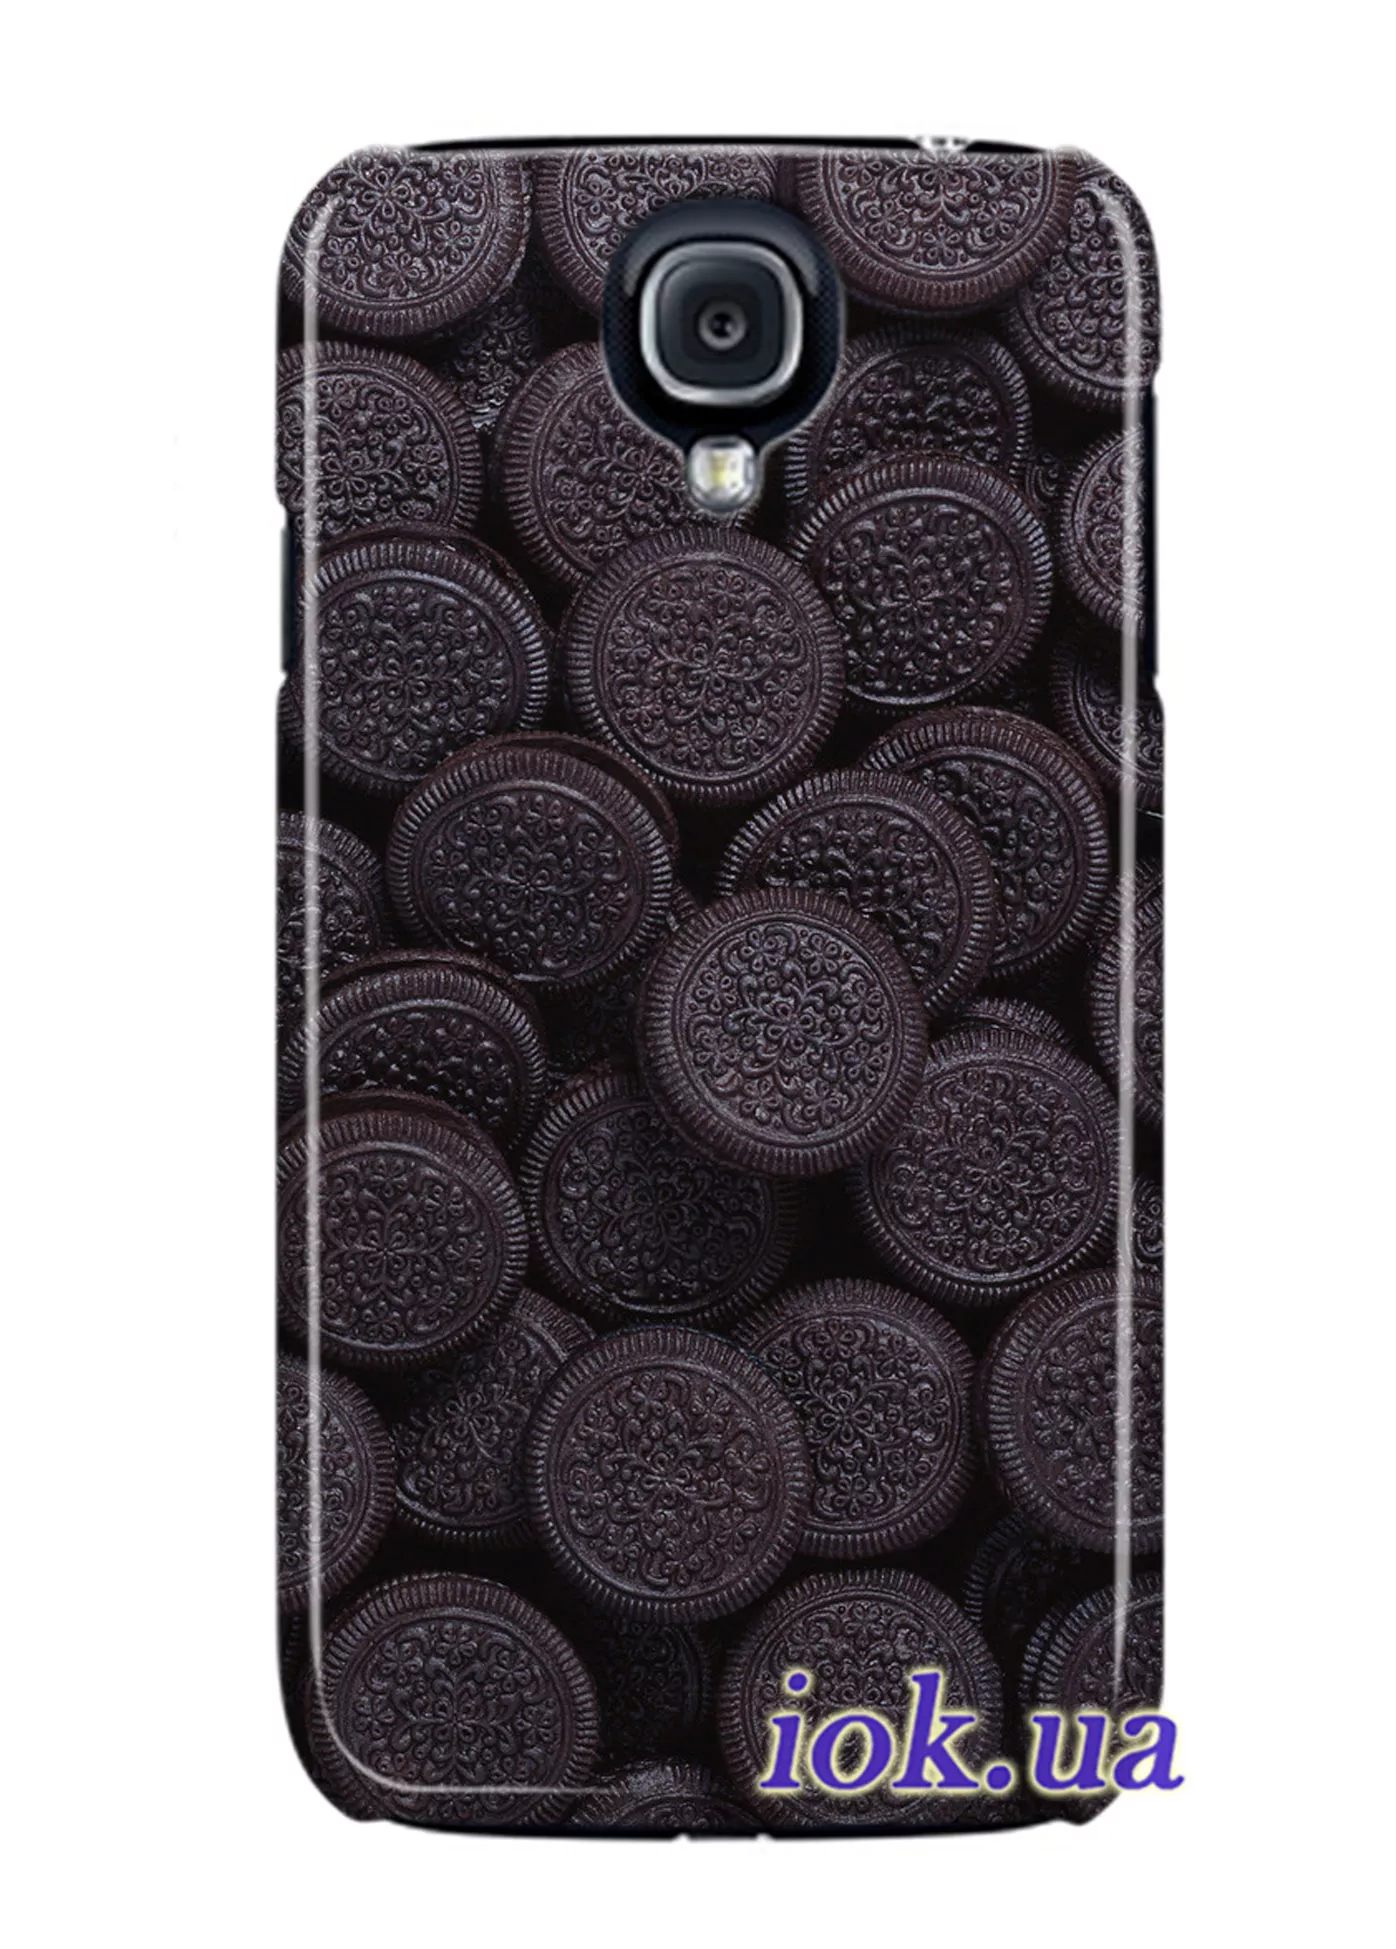 Чехол для Galaxy S4 Black Edition - Печенька